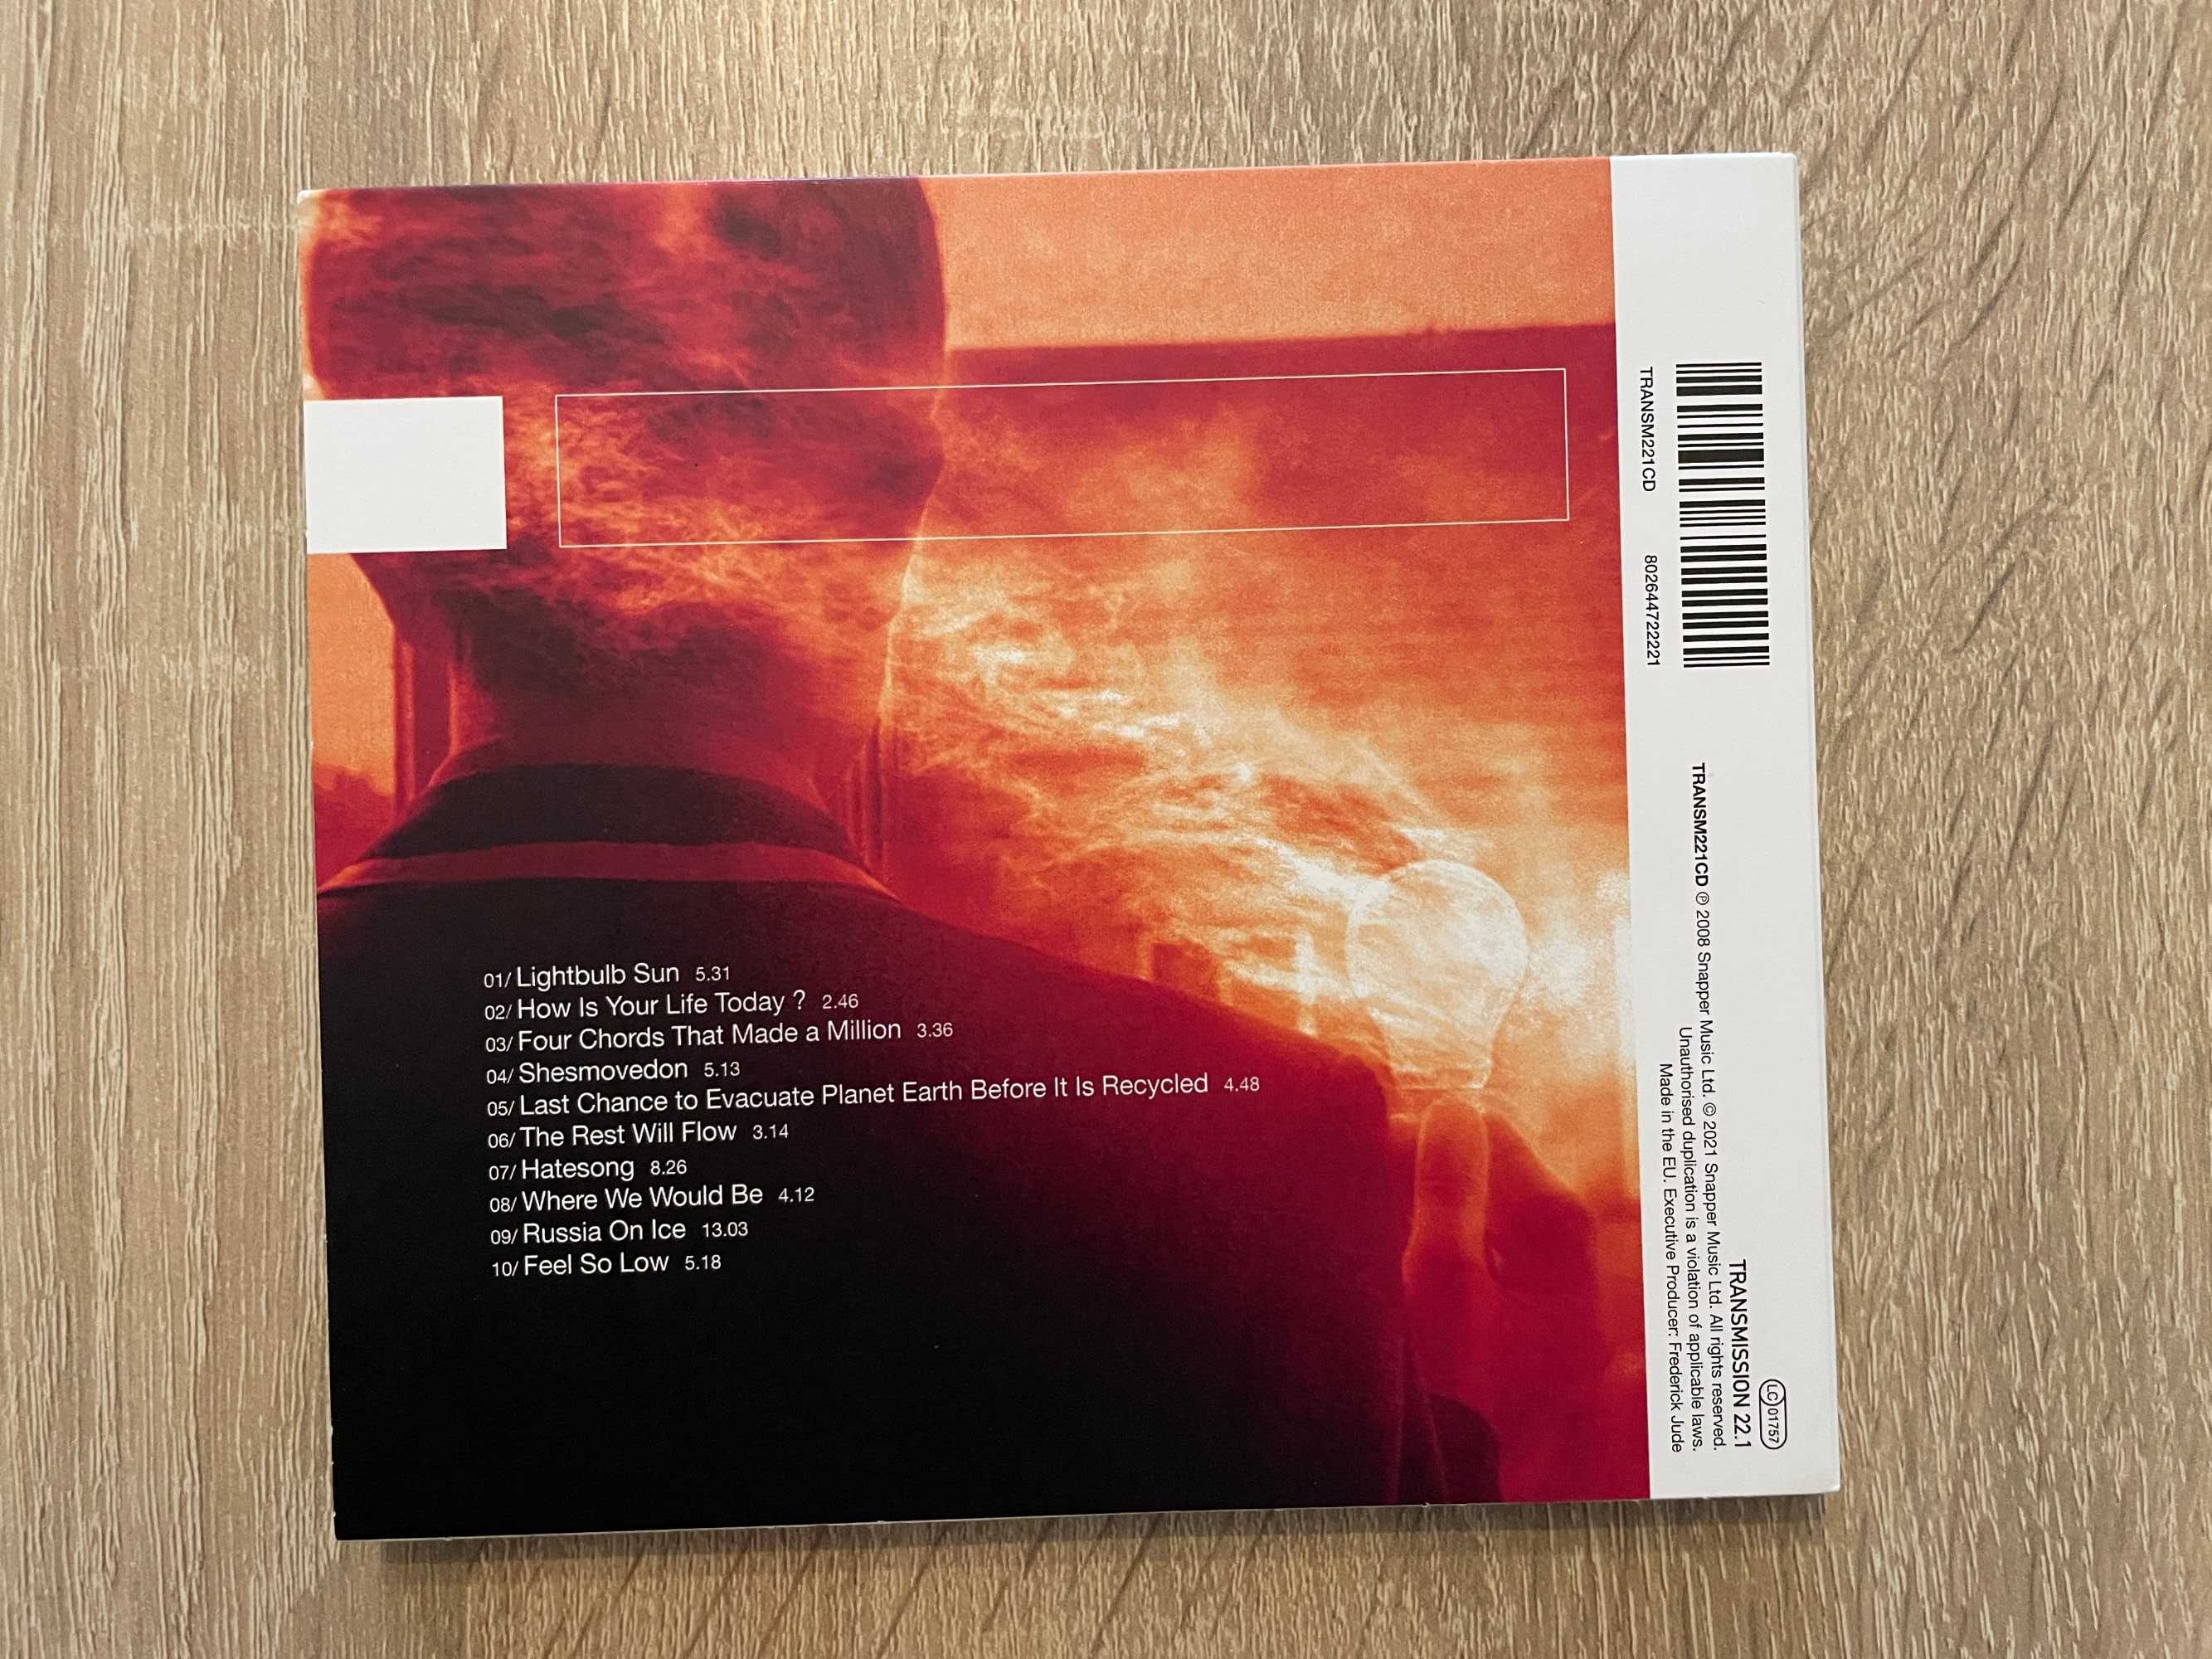 Porcupine Tree - Lightbulb Sun - cd - jak nowa